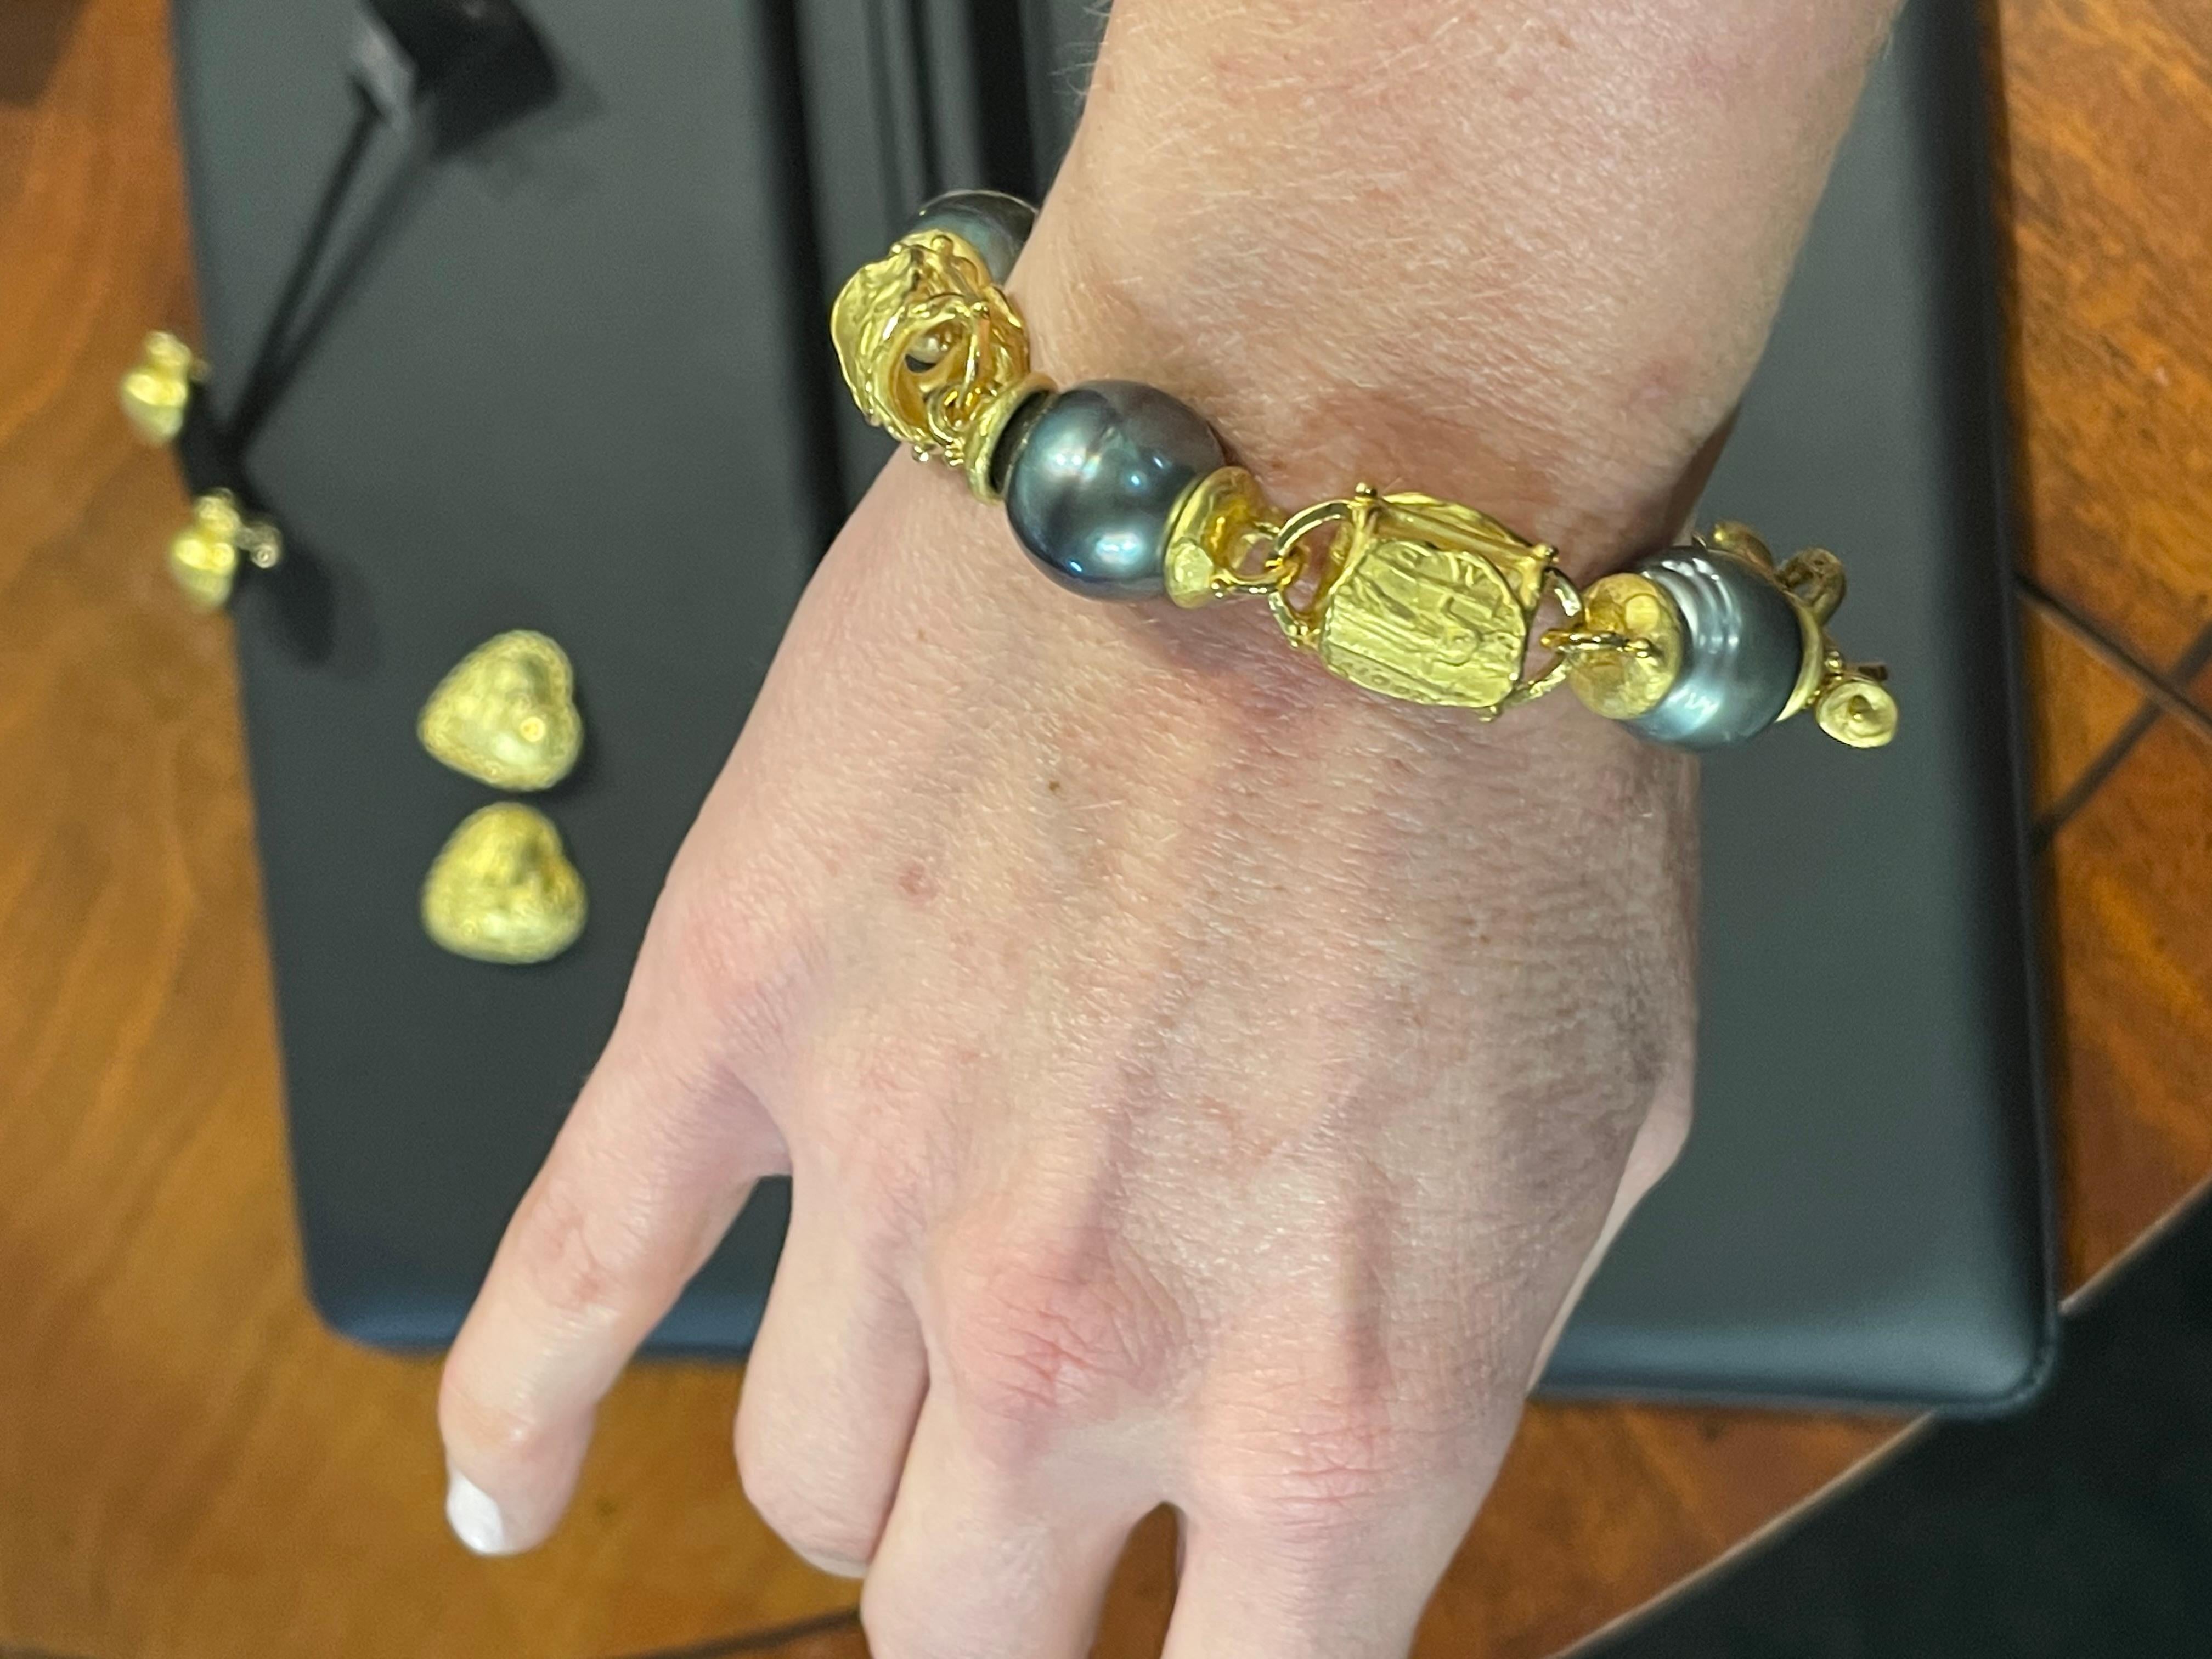 Round Cut Denise Roberge 22 Karat Yellow Gold Bracelet with Tahitian Pearls